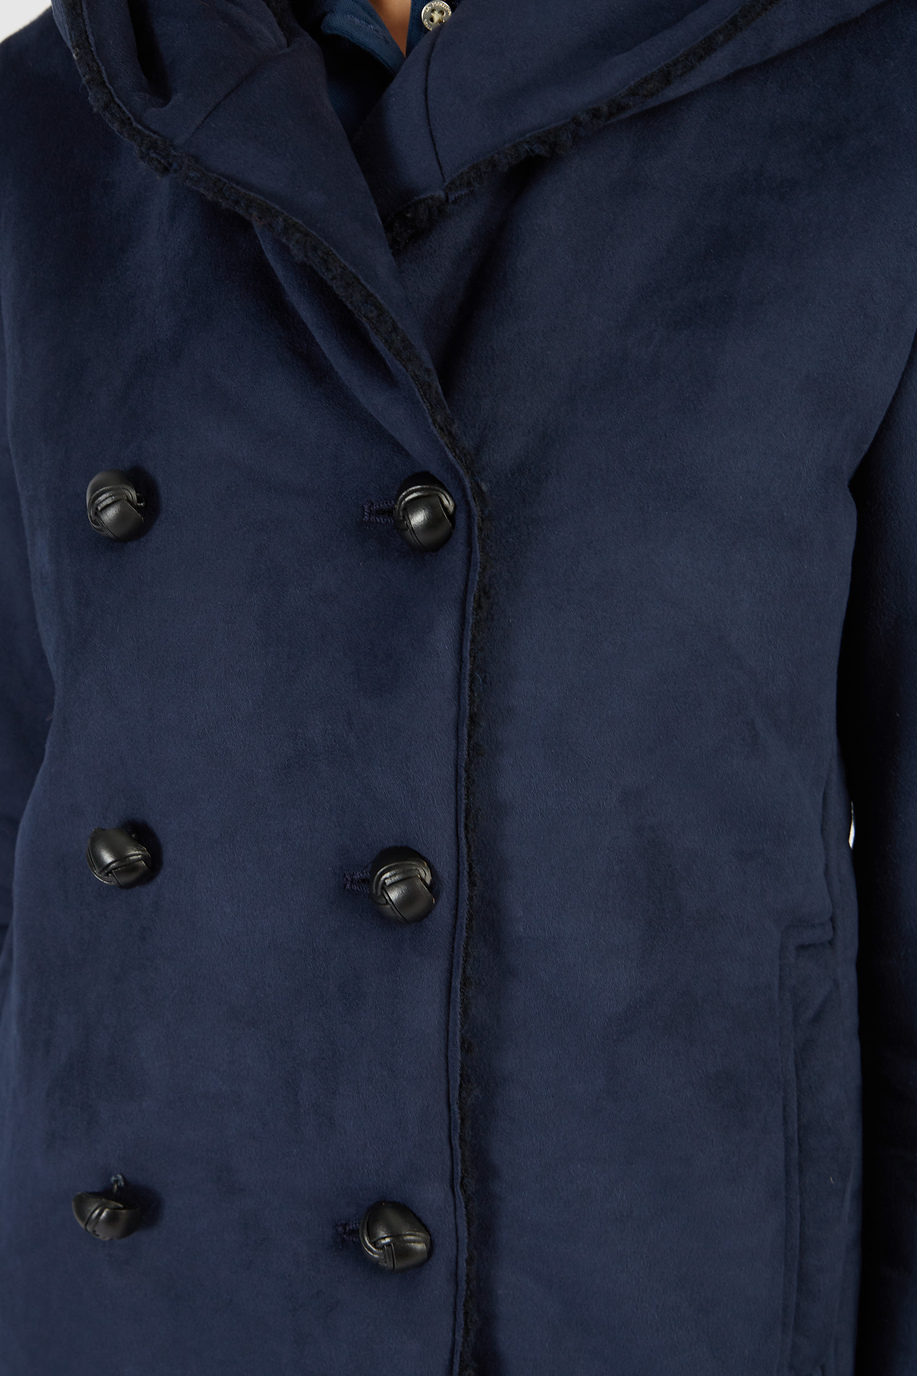 Women’s velvet-effect jacket with buttons regular fit - Winter looks for her | La Martina - Official Online Shop